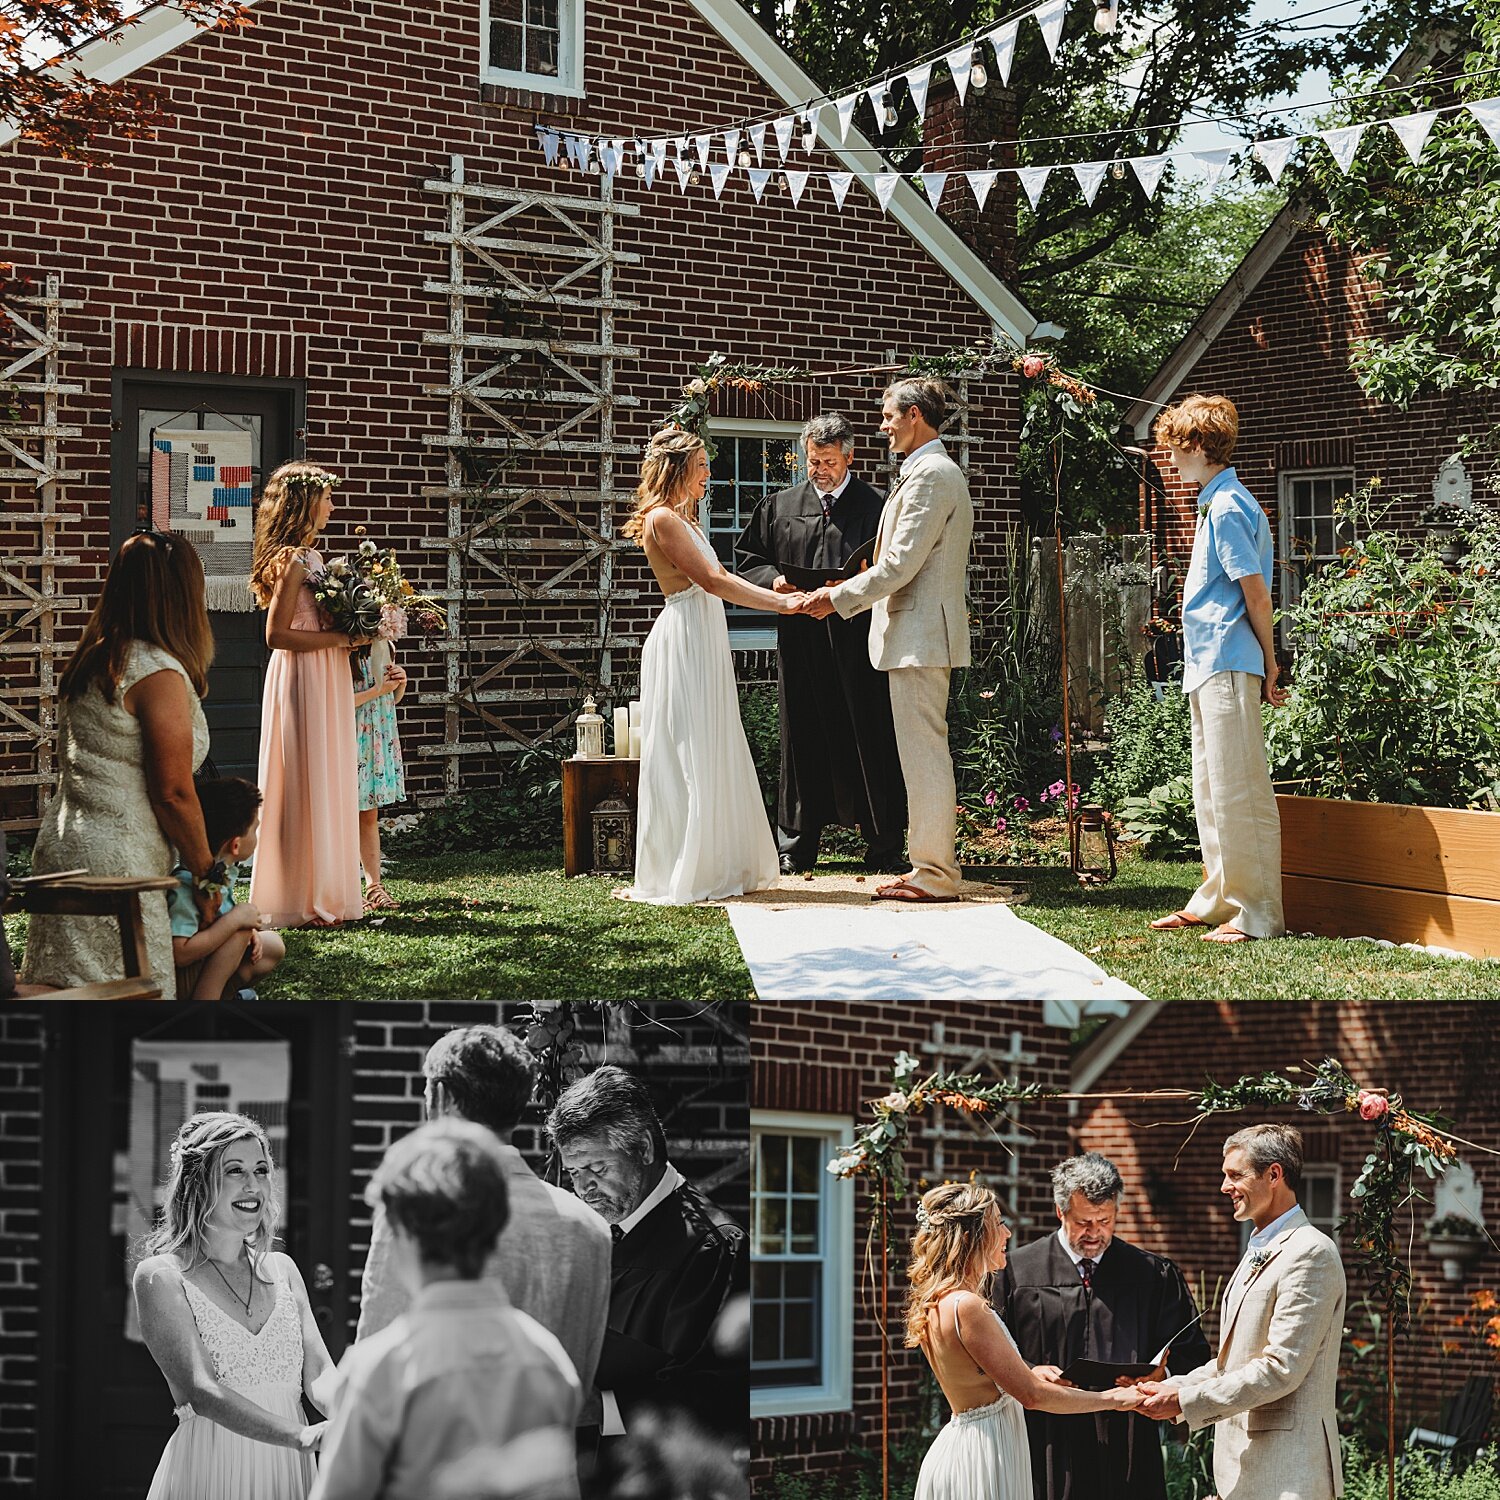 Wyomissing Berks County Pennsylvania intimate summer backyard Covid wedding photographer